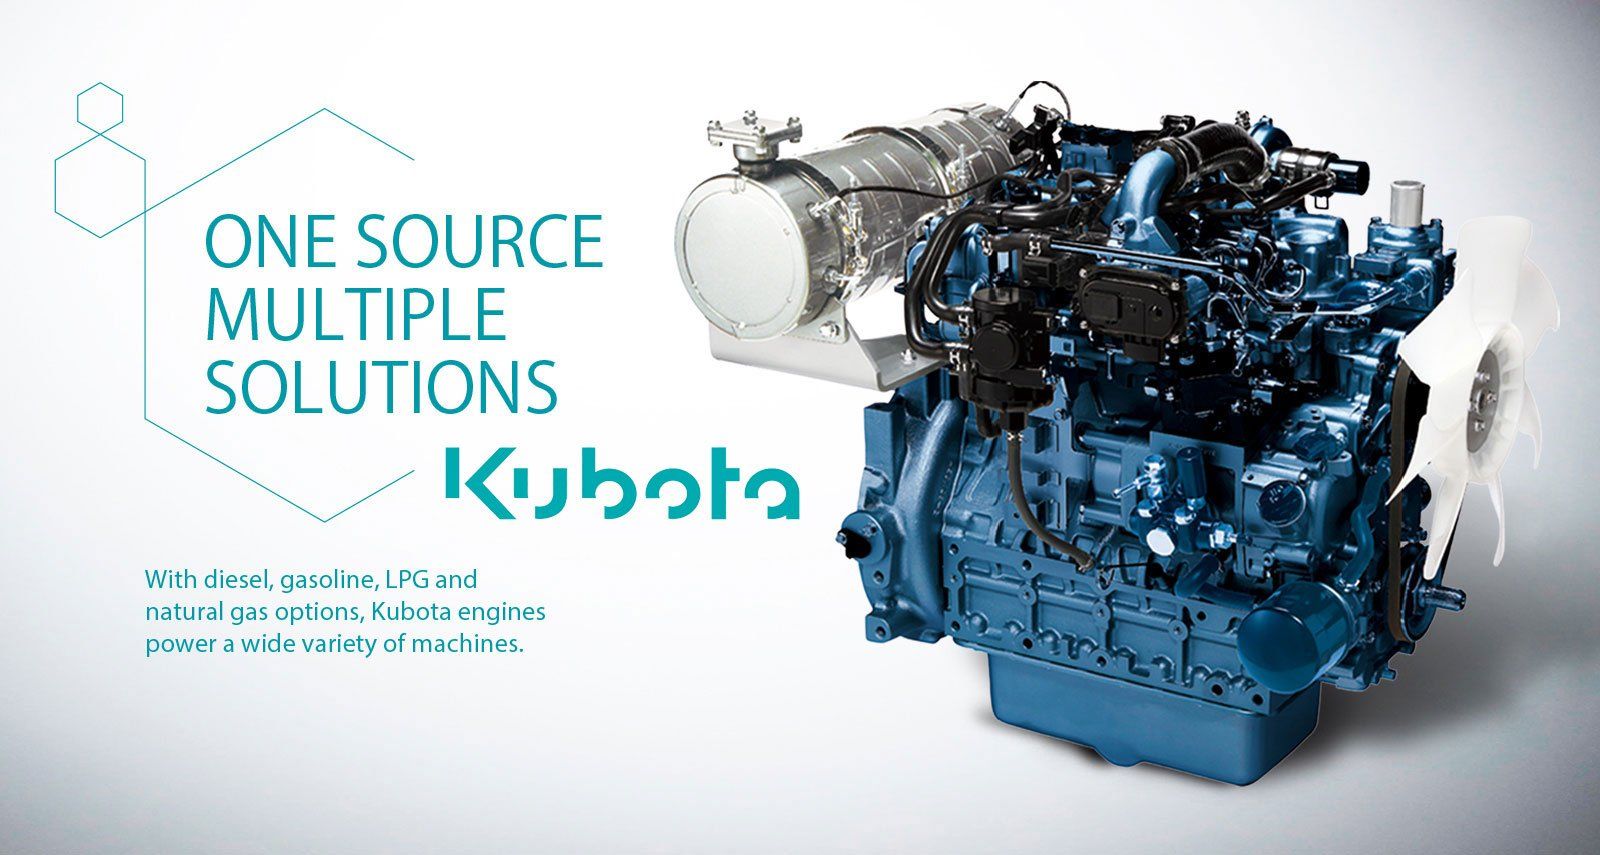 KUBOTA - Engine for industrial